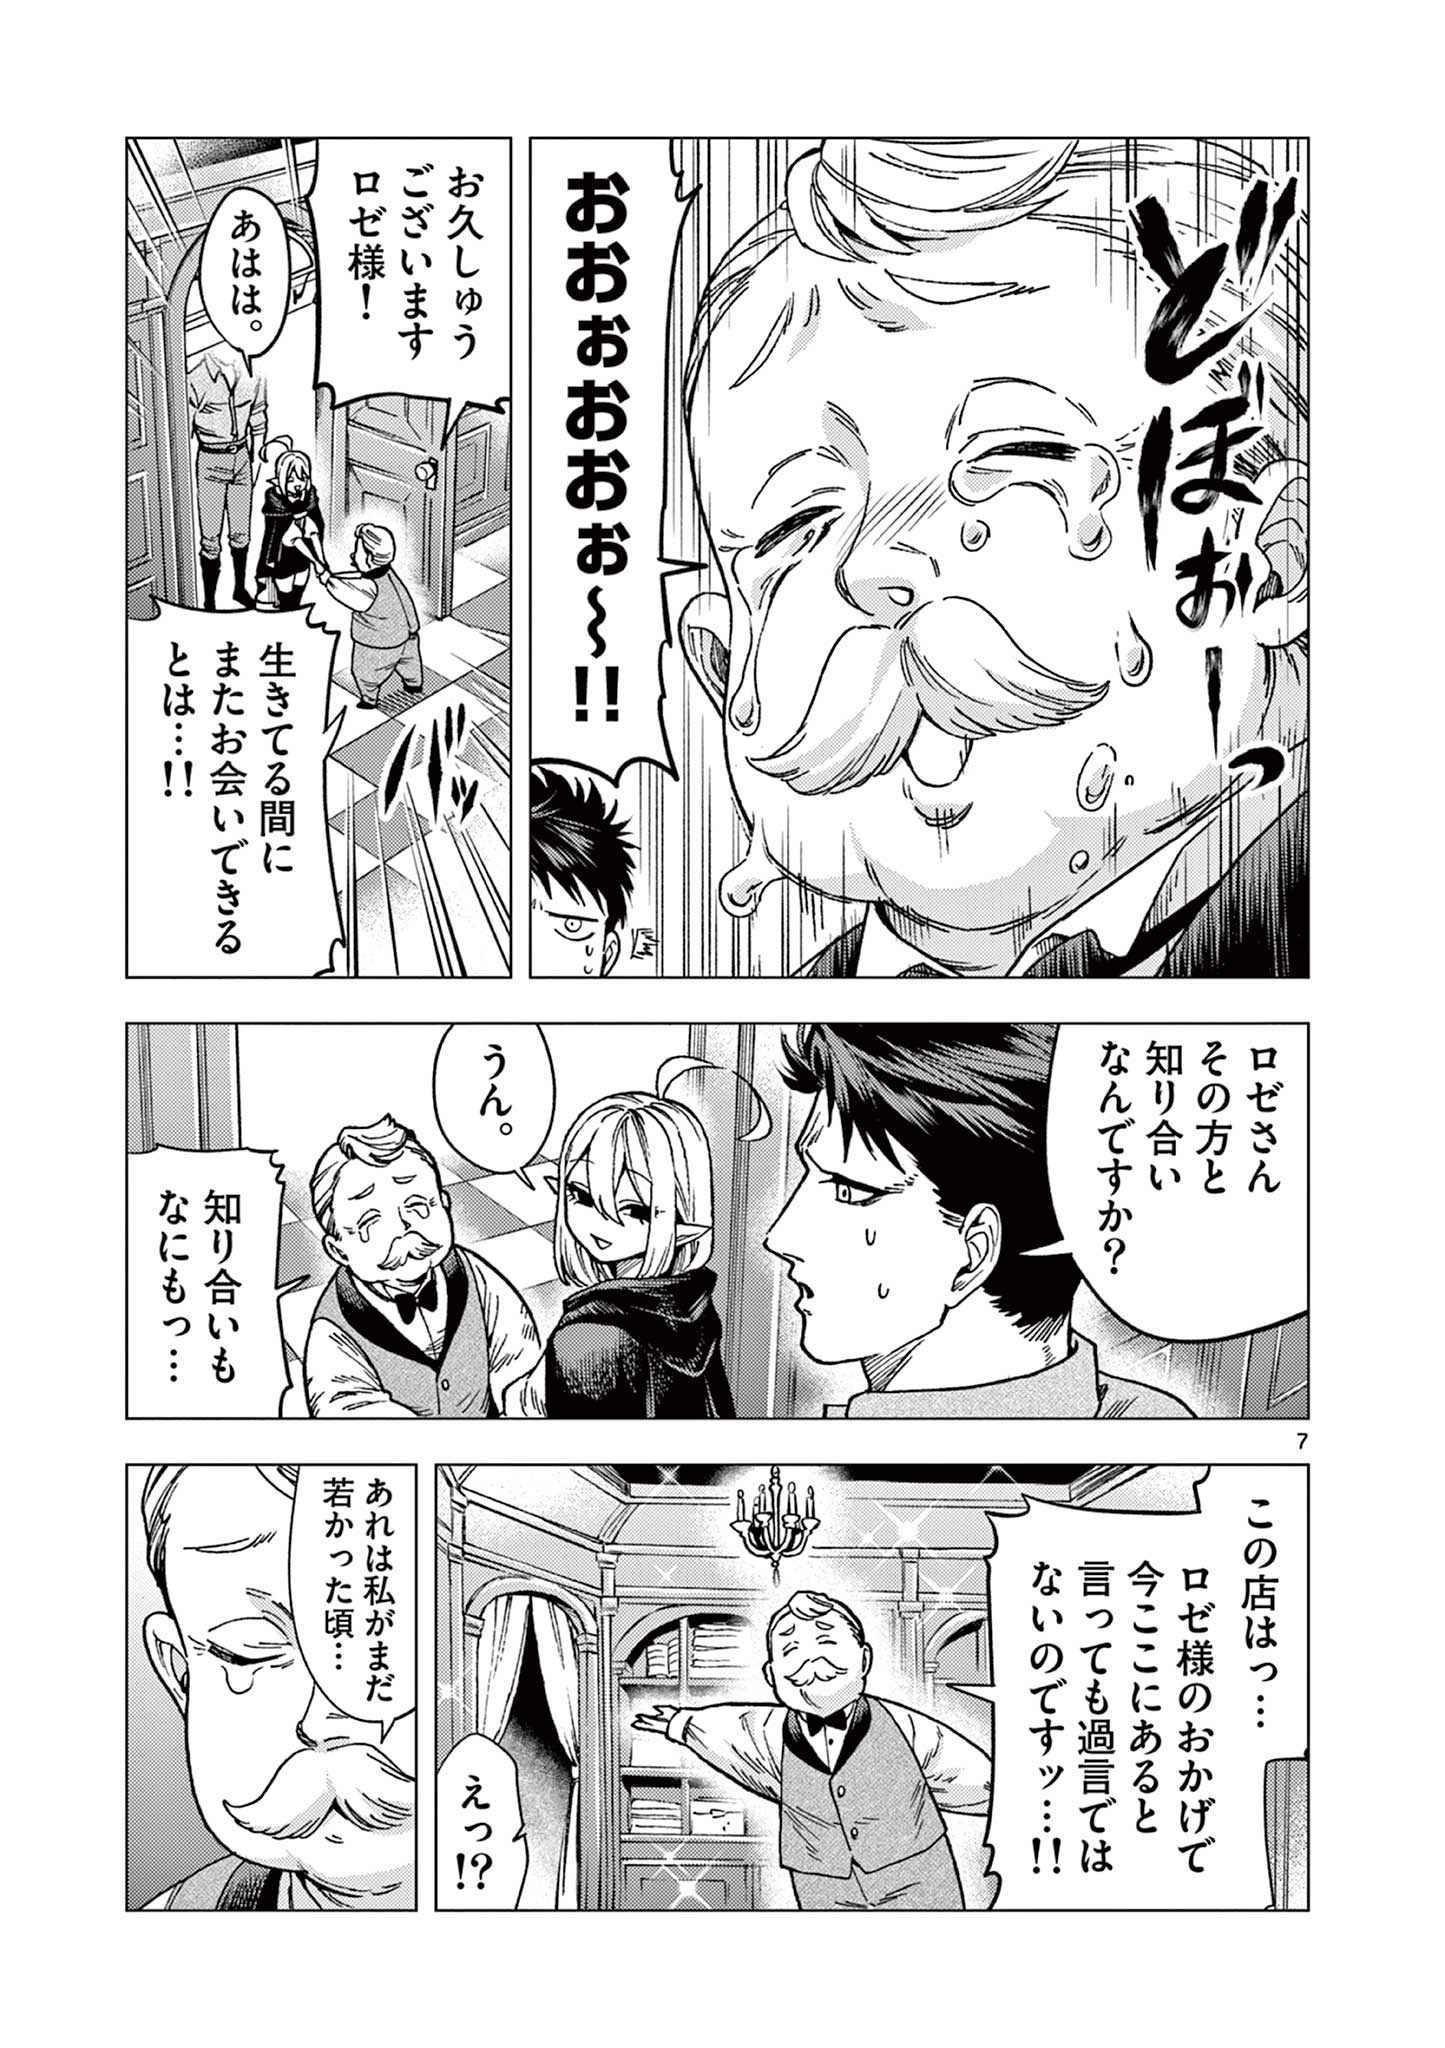 Raul to Kyuuketsuki - Chapter 3 - Page 7